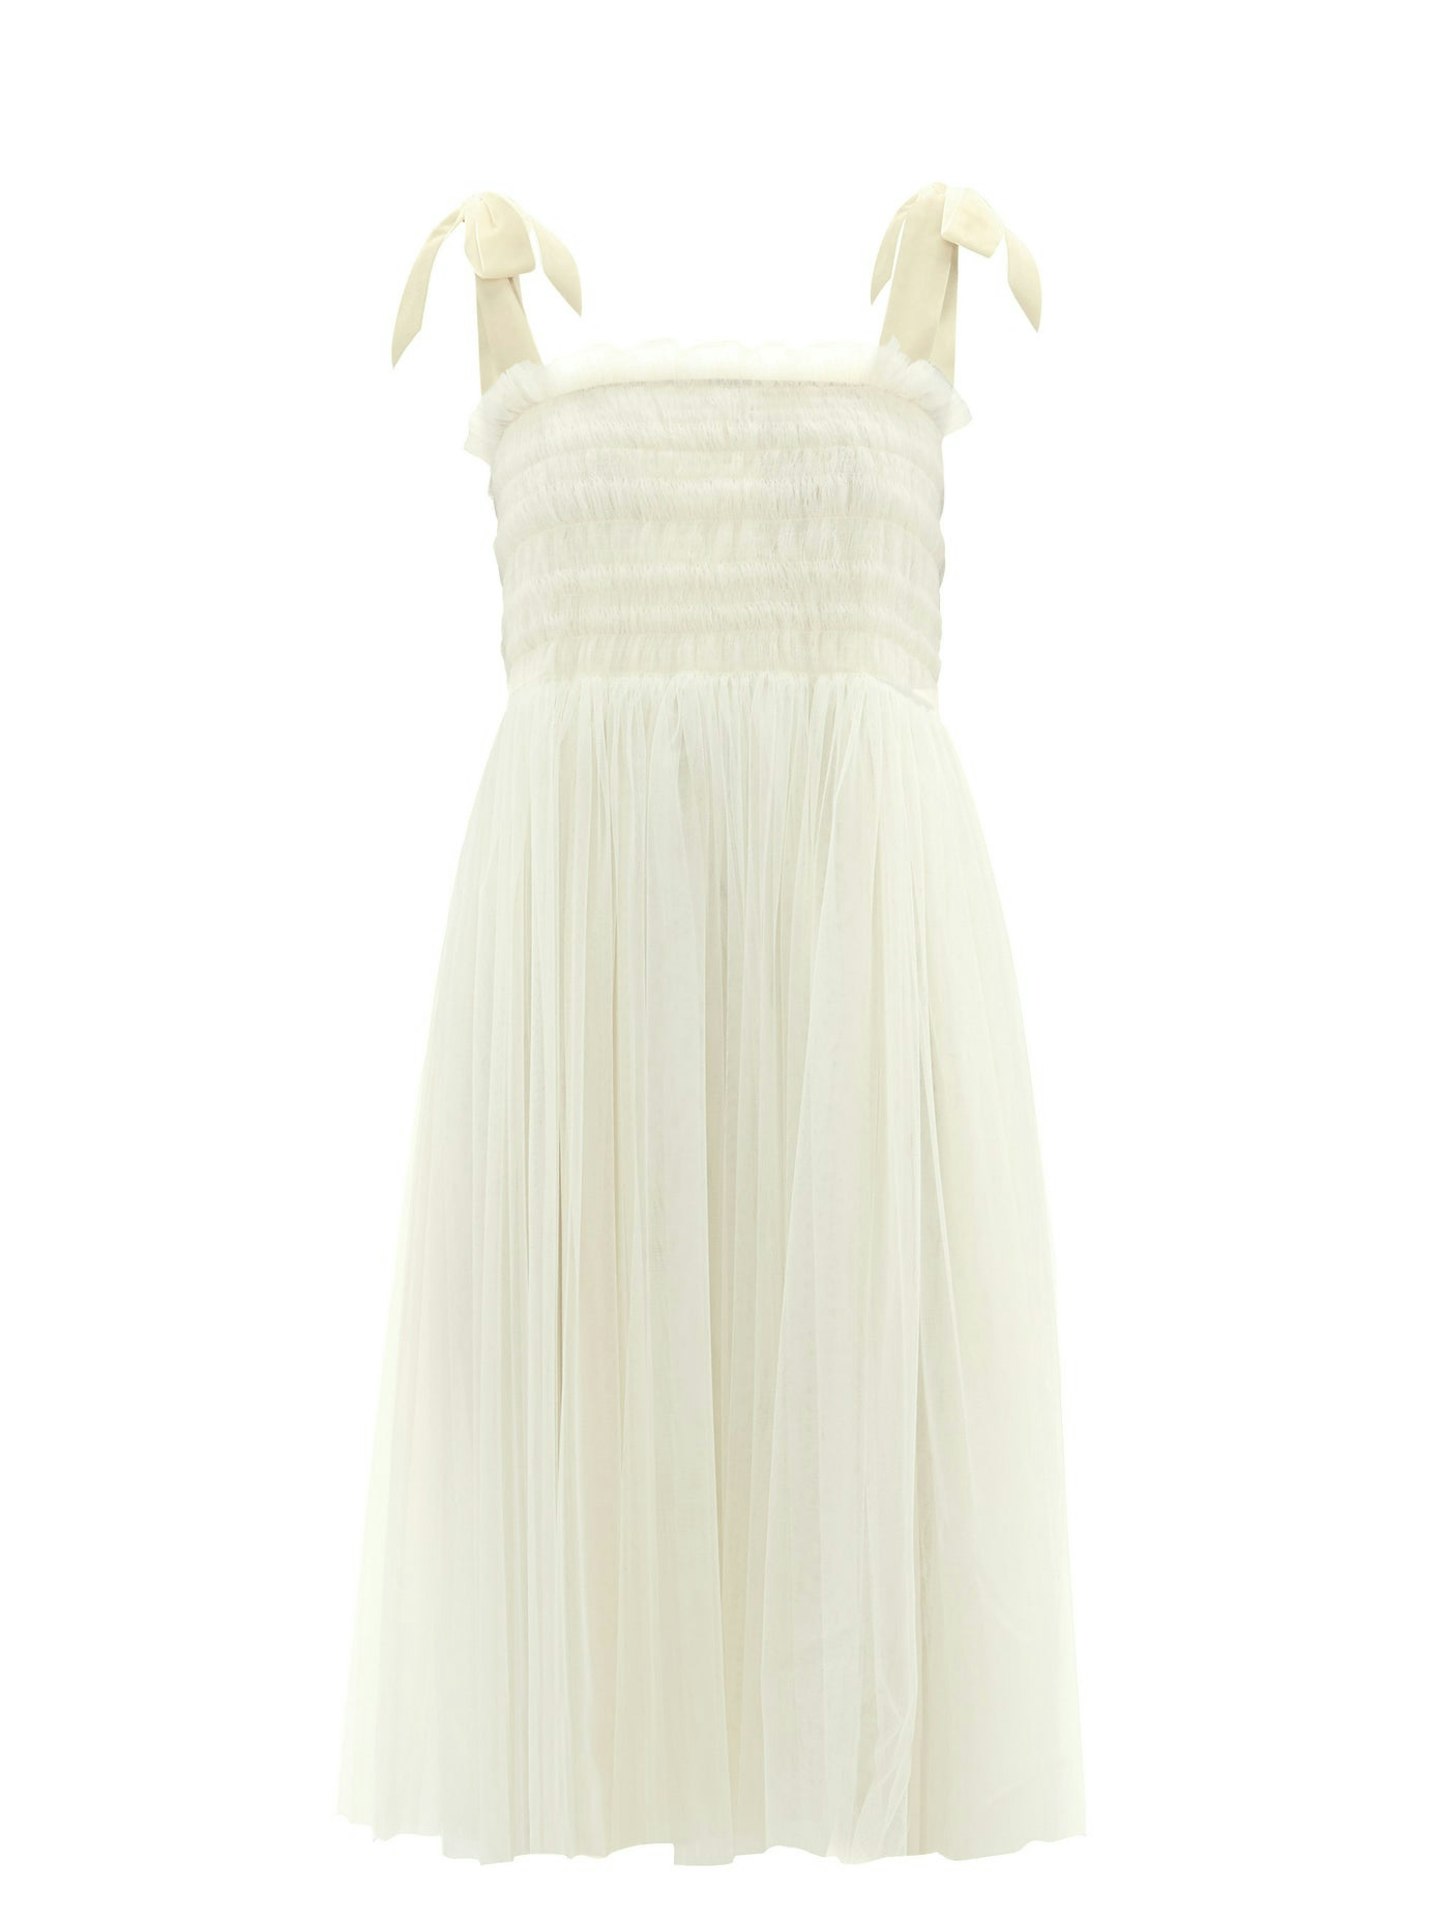 Molly Goddard, Shirred Tulle Dress, £1,500